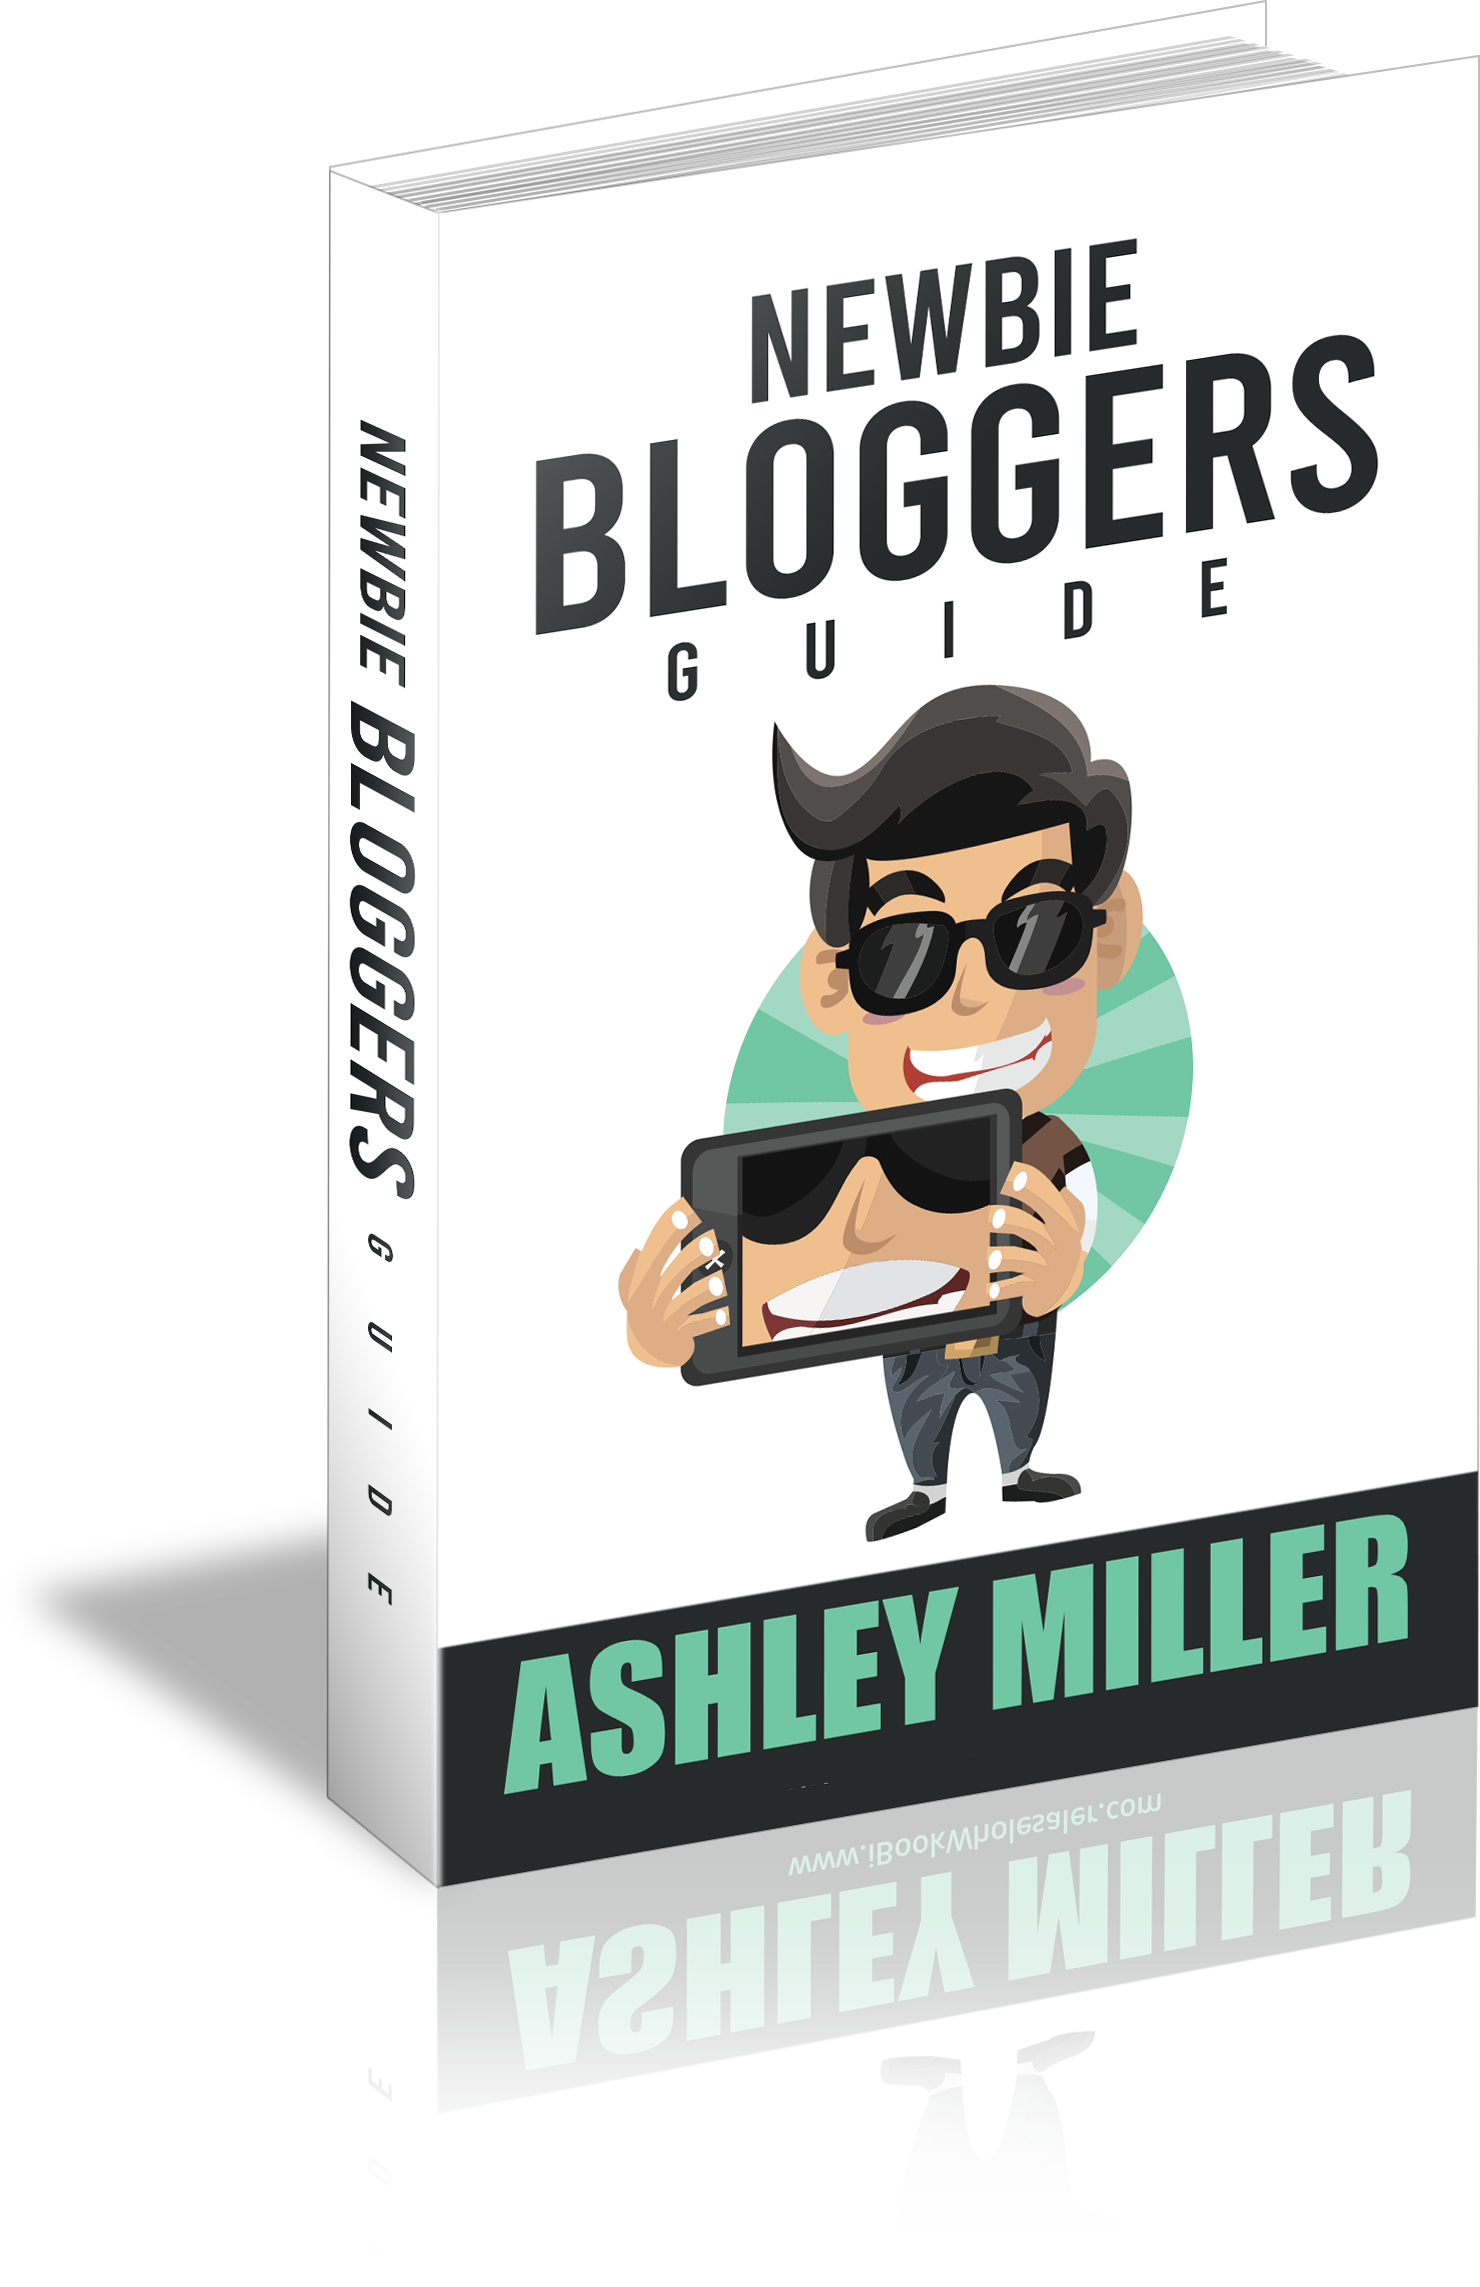 Newbie Bloggers Guide